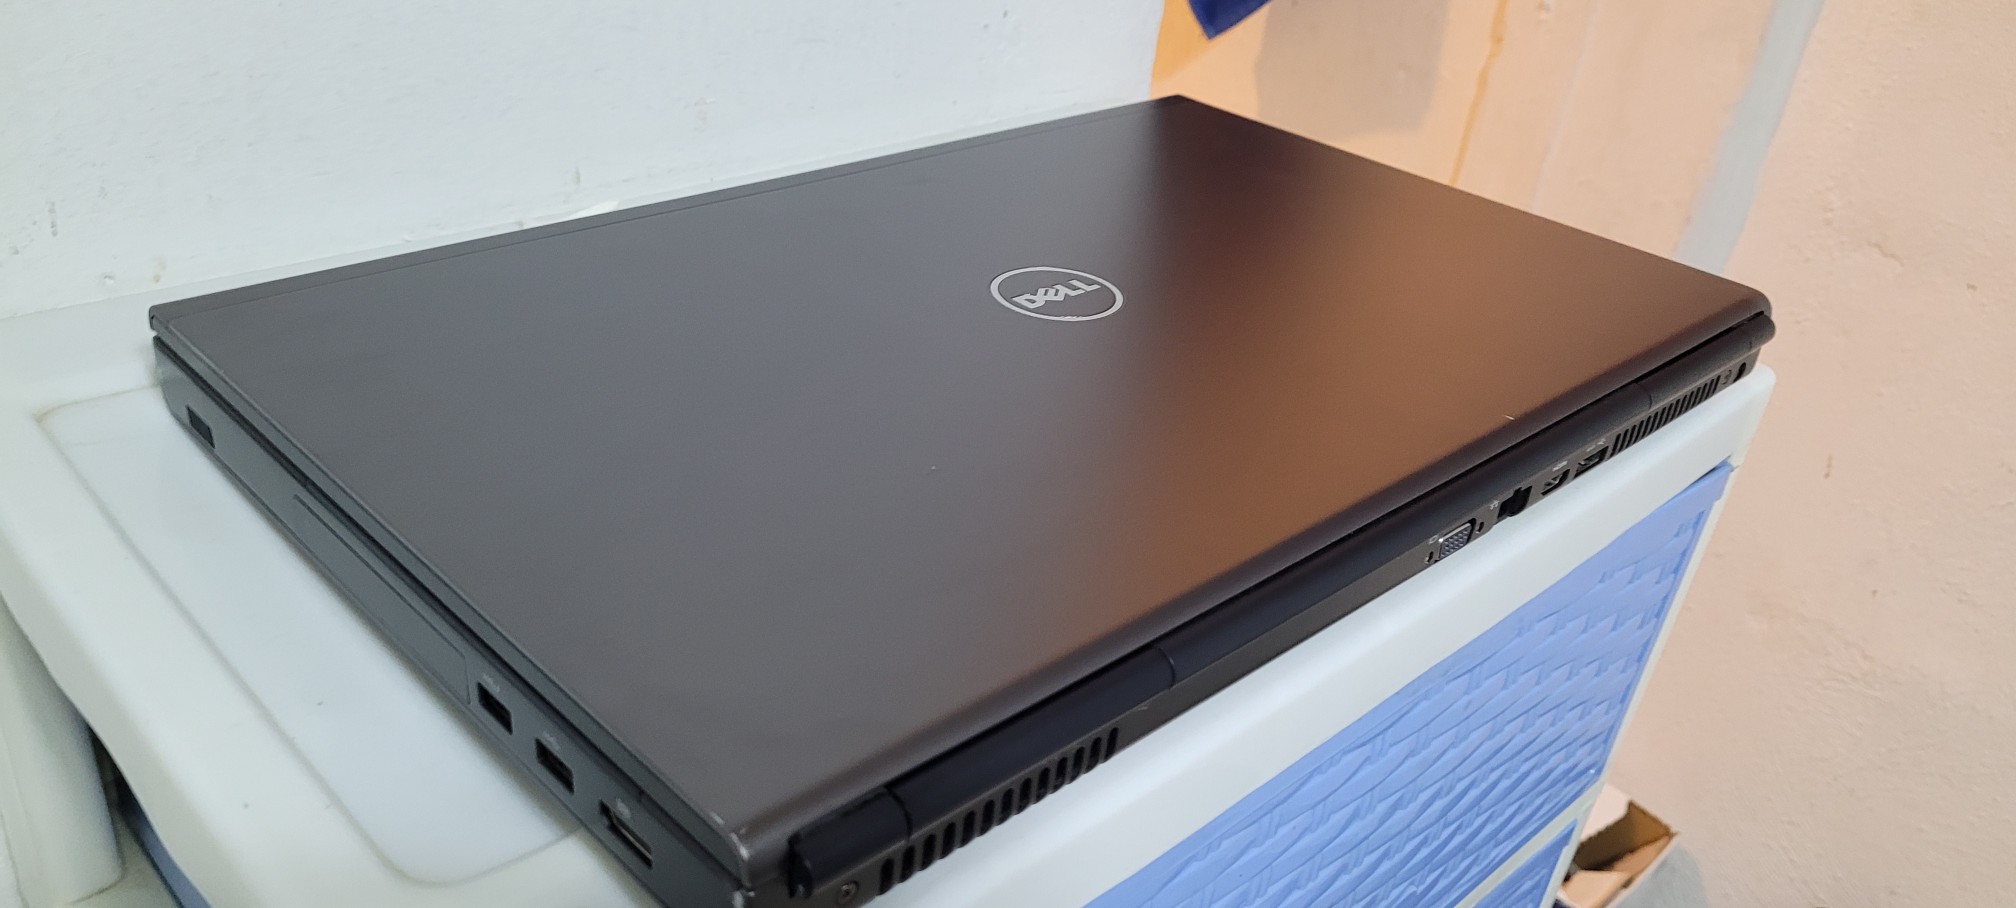 computadoras y laptops - Dell 6700 17.3 Pulg Core i7 Ram 16gb Disco 500gb SSD Nvidea 4gb Dedicada 2